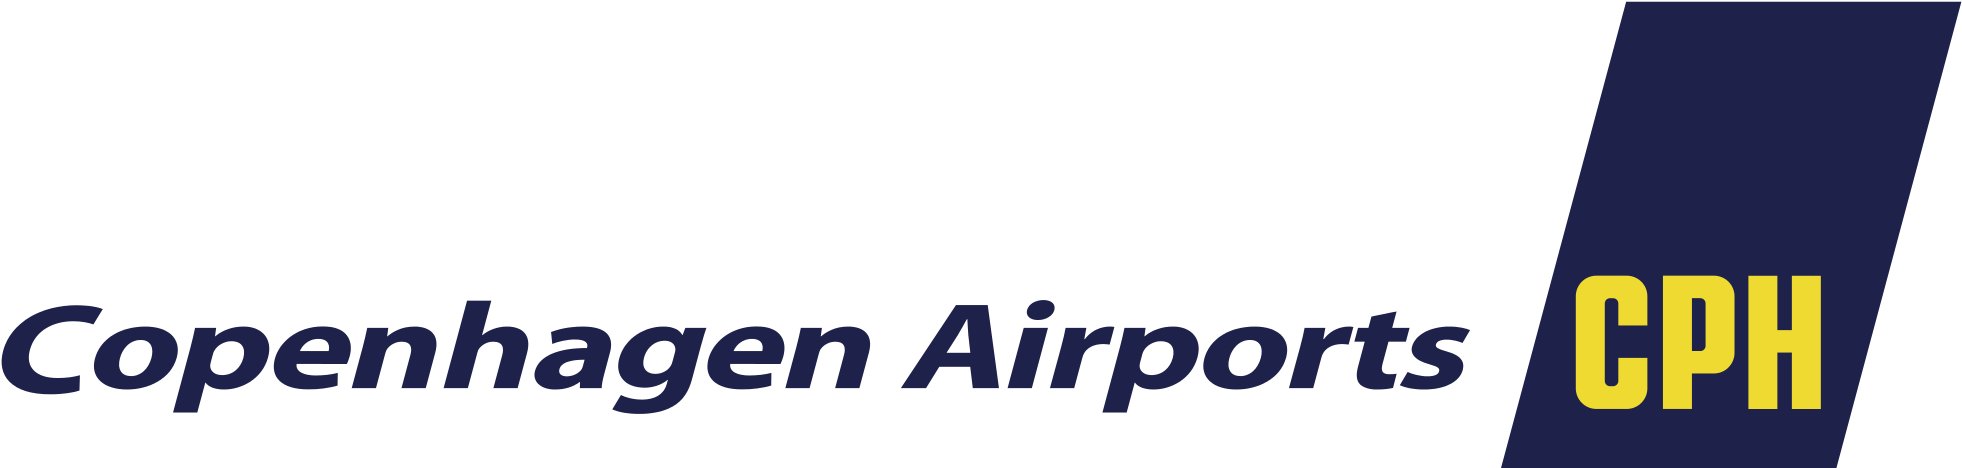 Cph Airport Logo Png (2000x482), Png Download